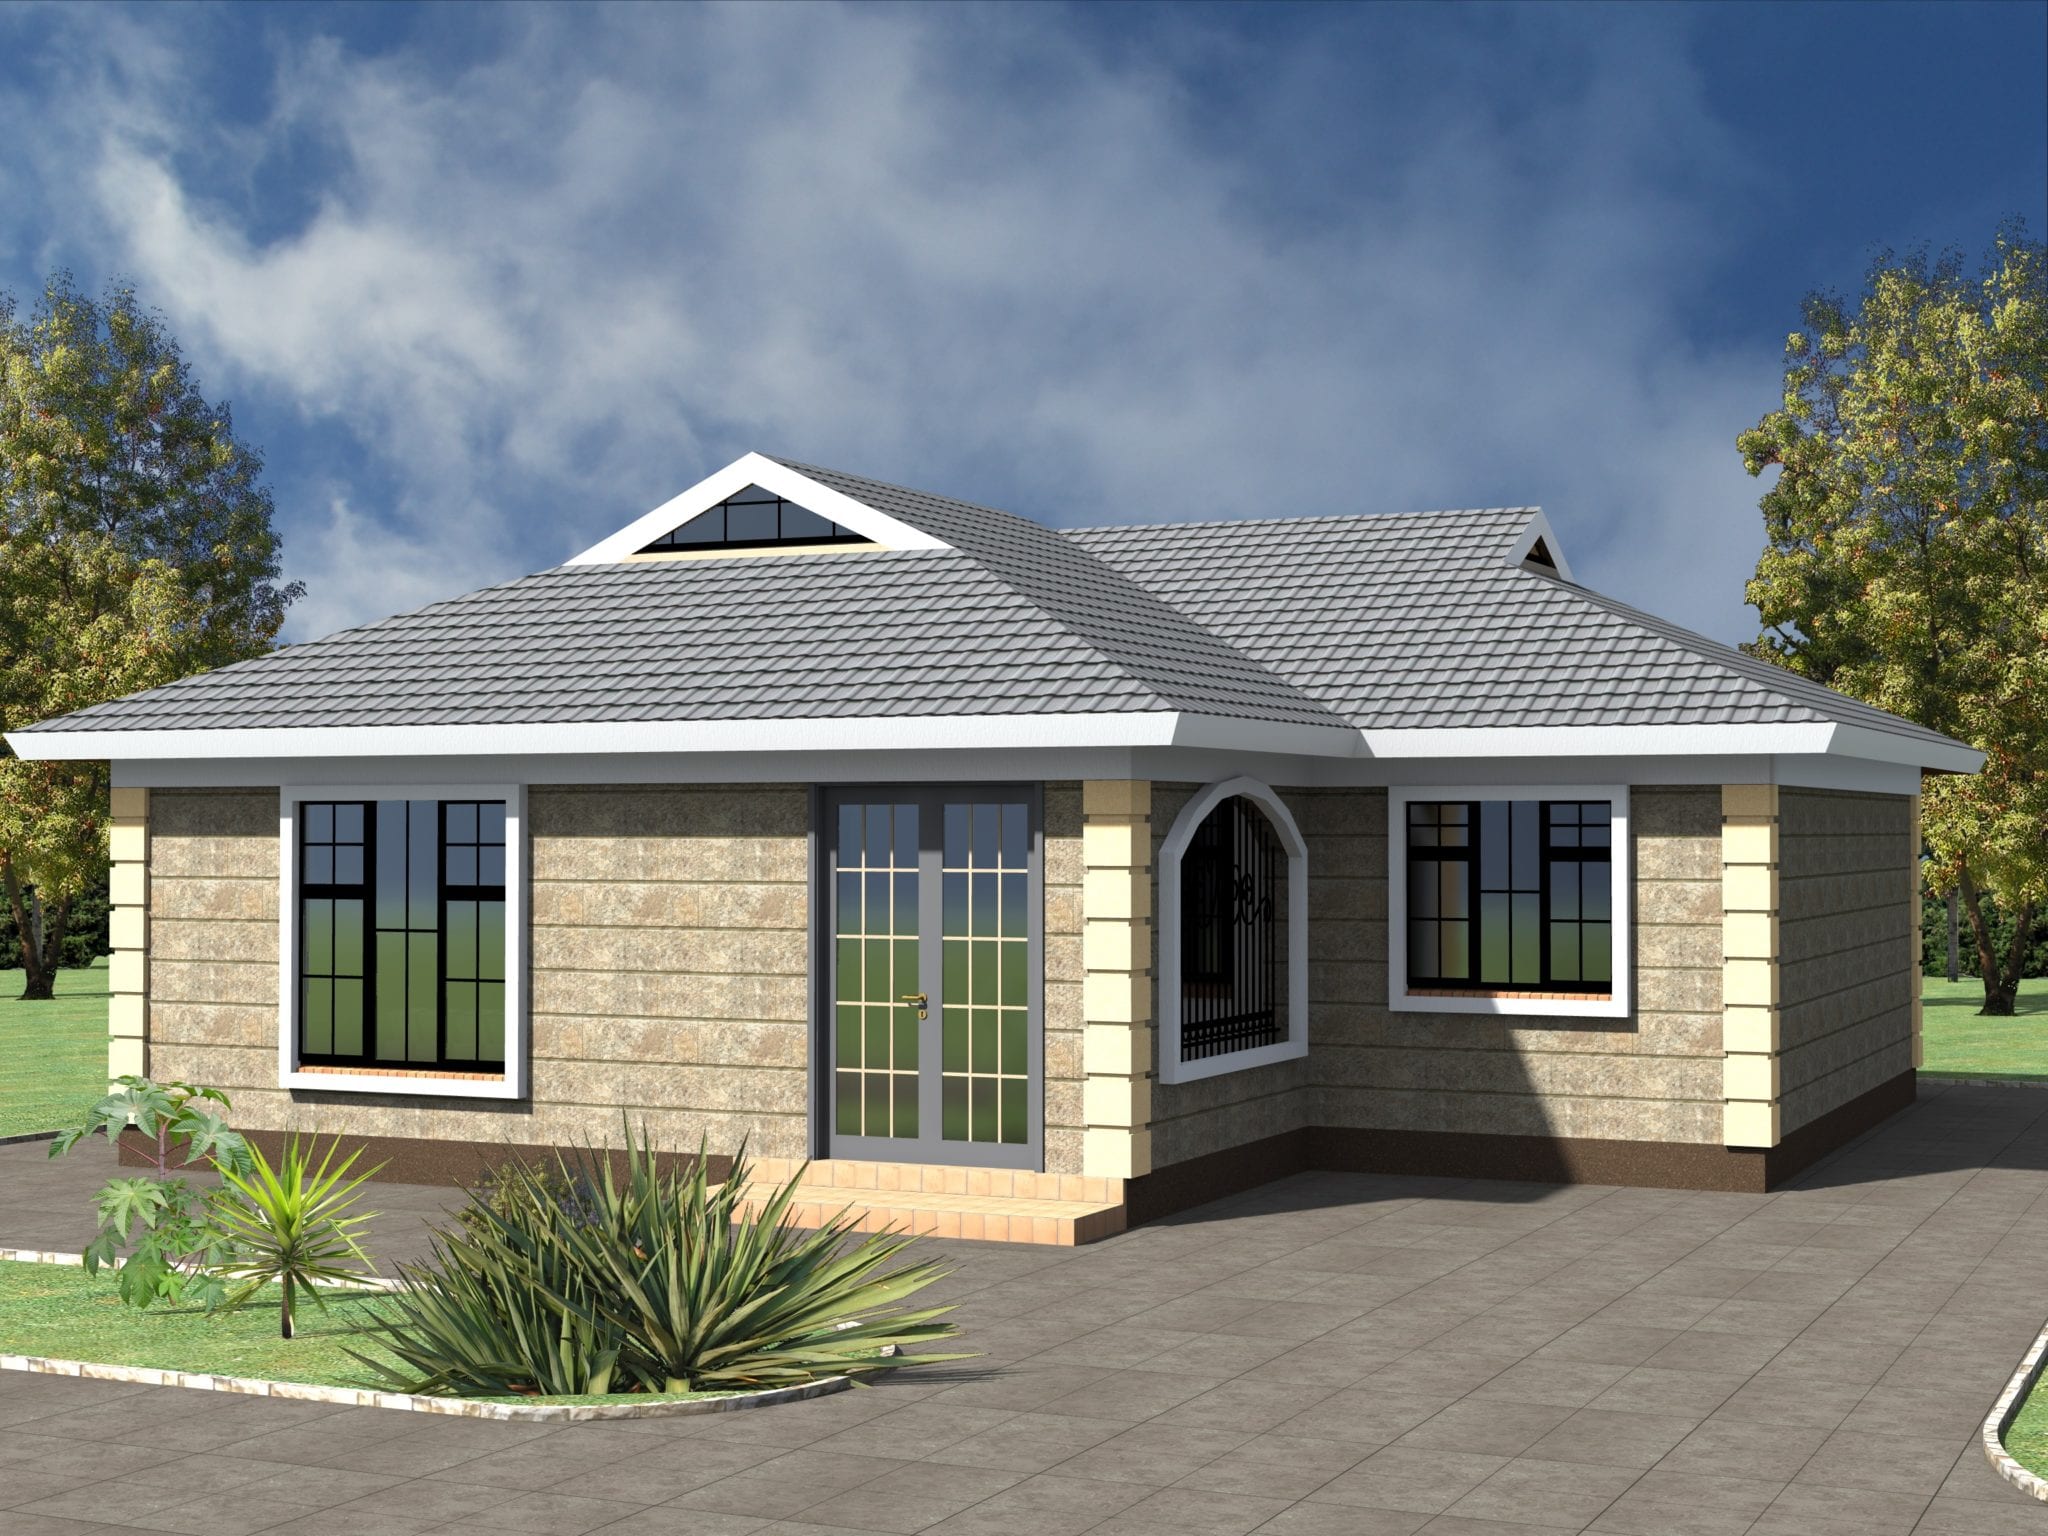  3  Bedroom  house  plan  design  in kenya  HPD Consult